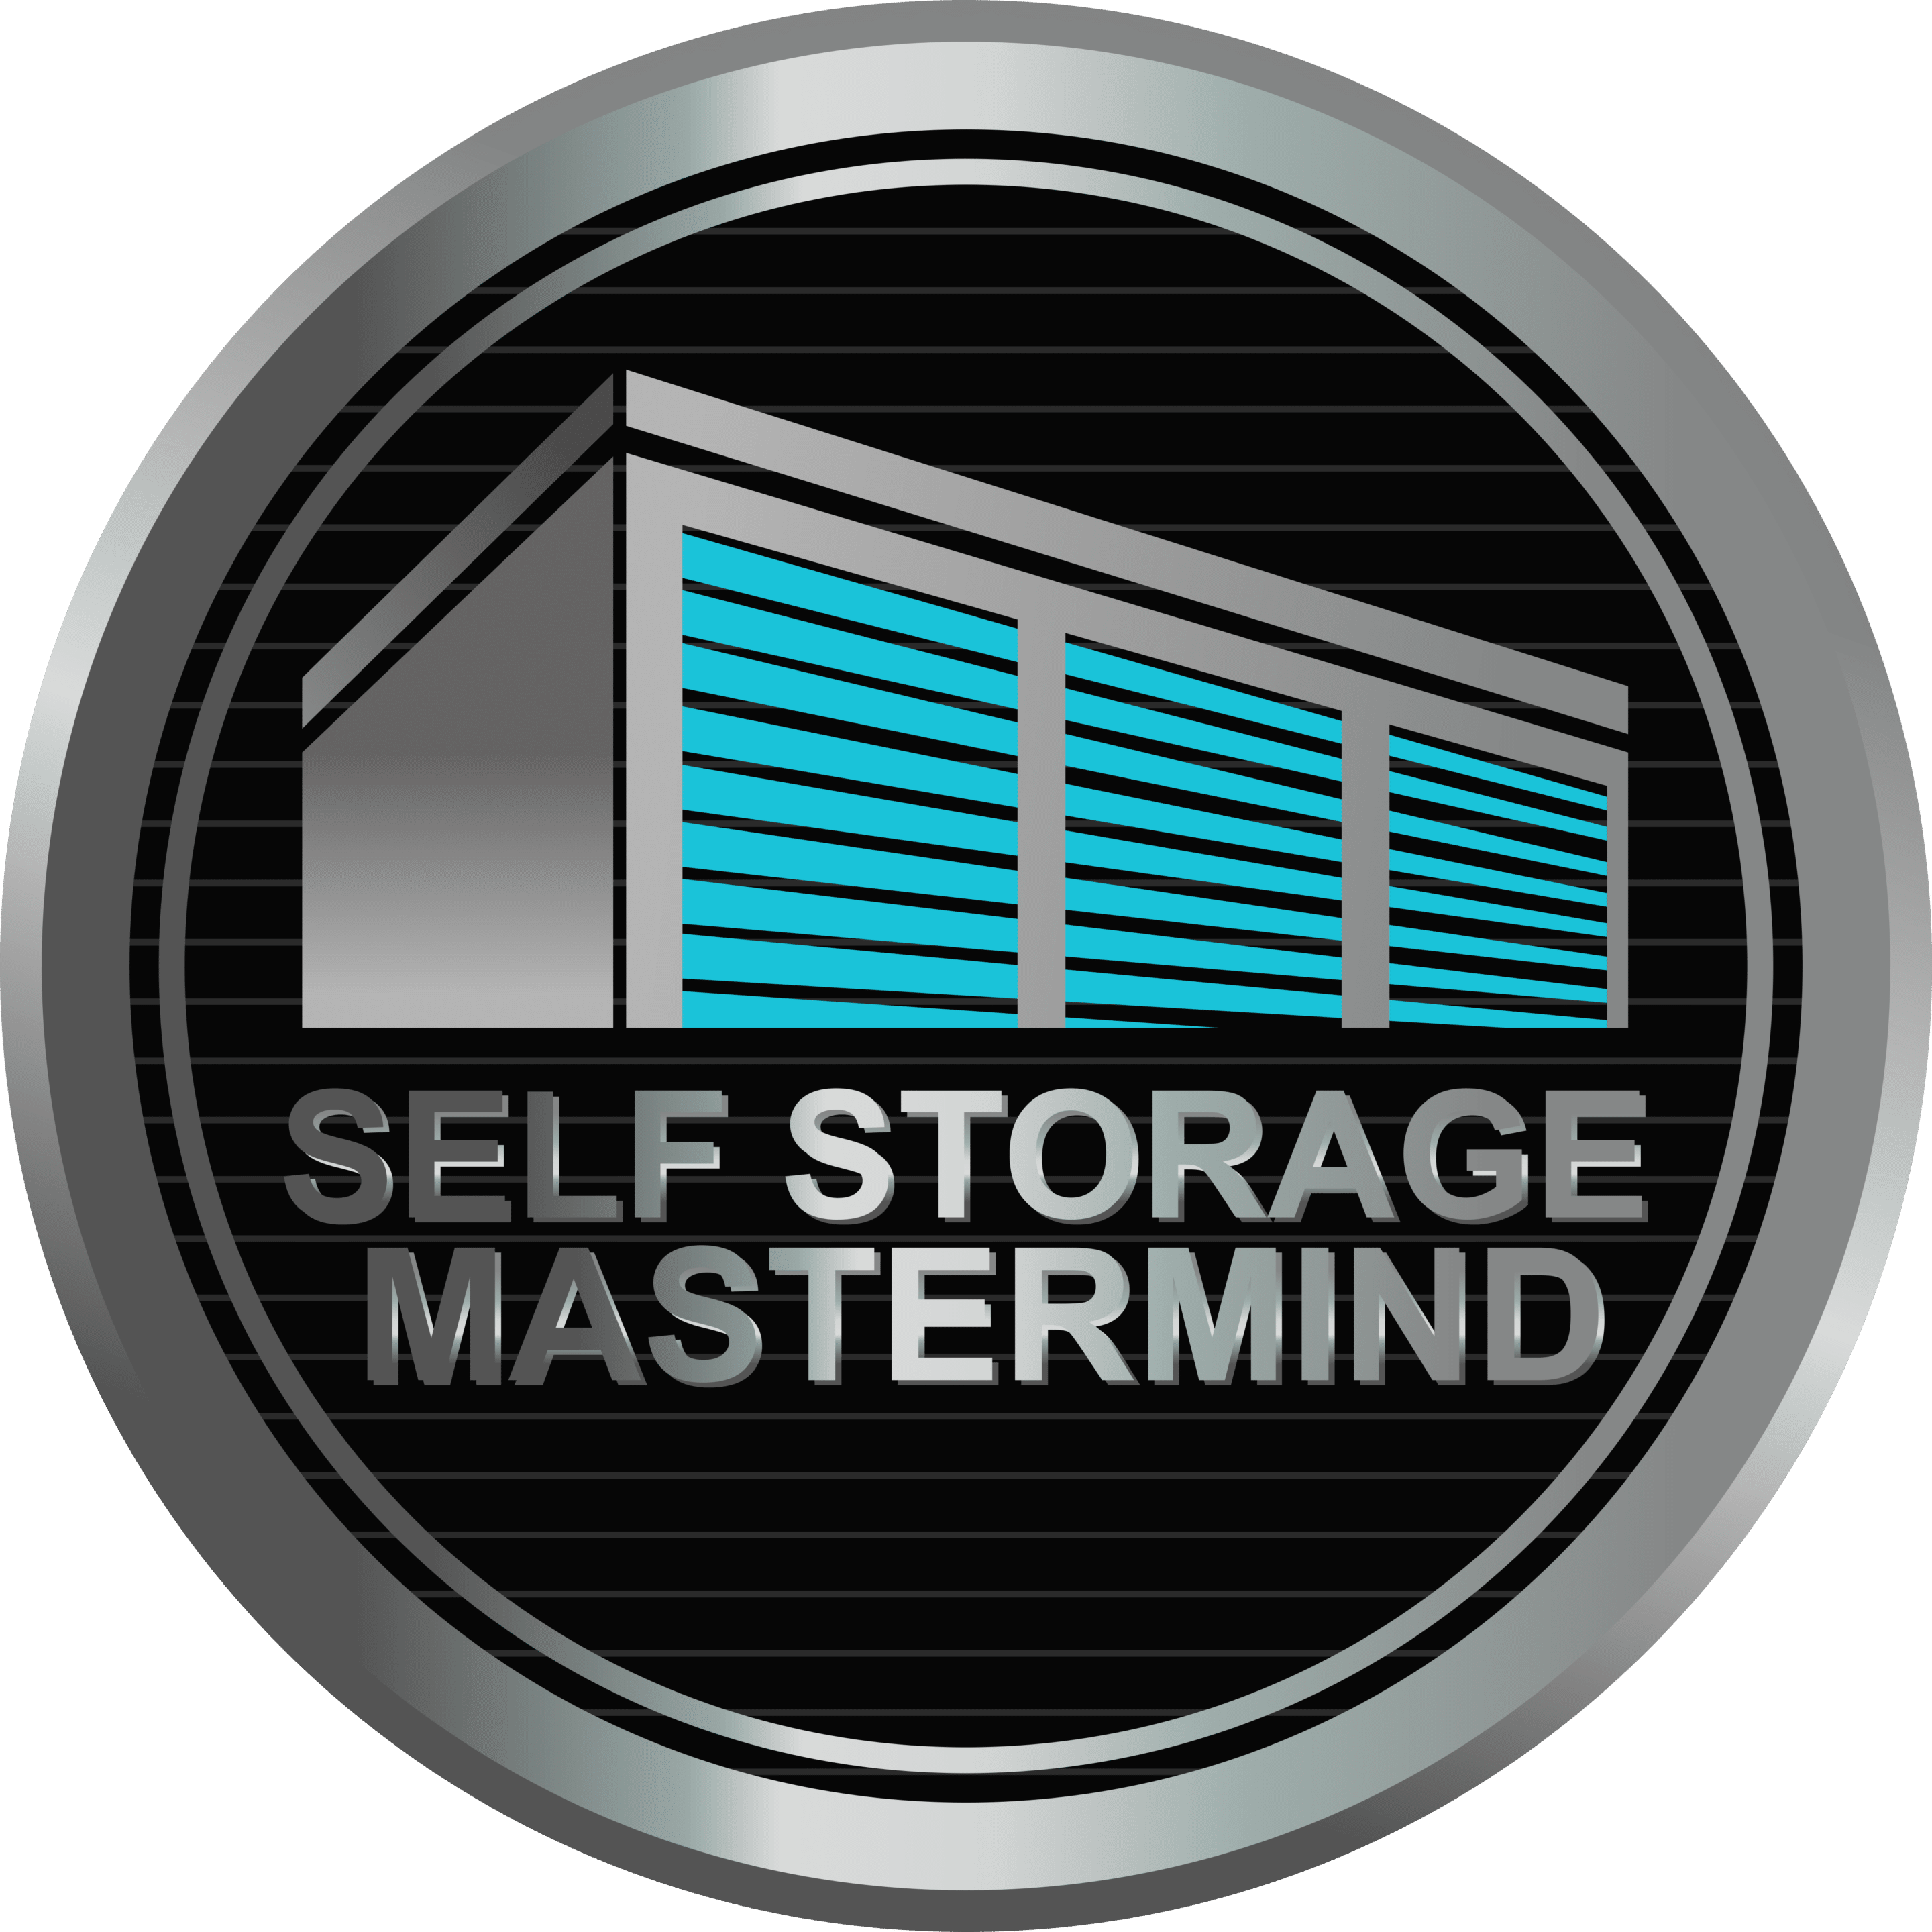 The Self Storage Mastermind